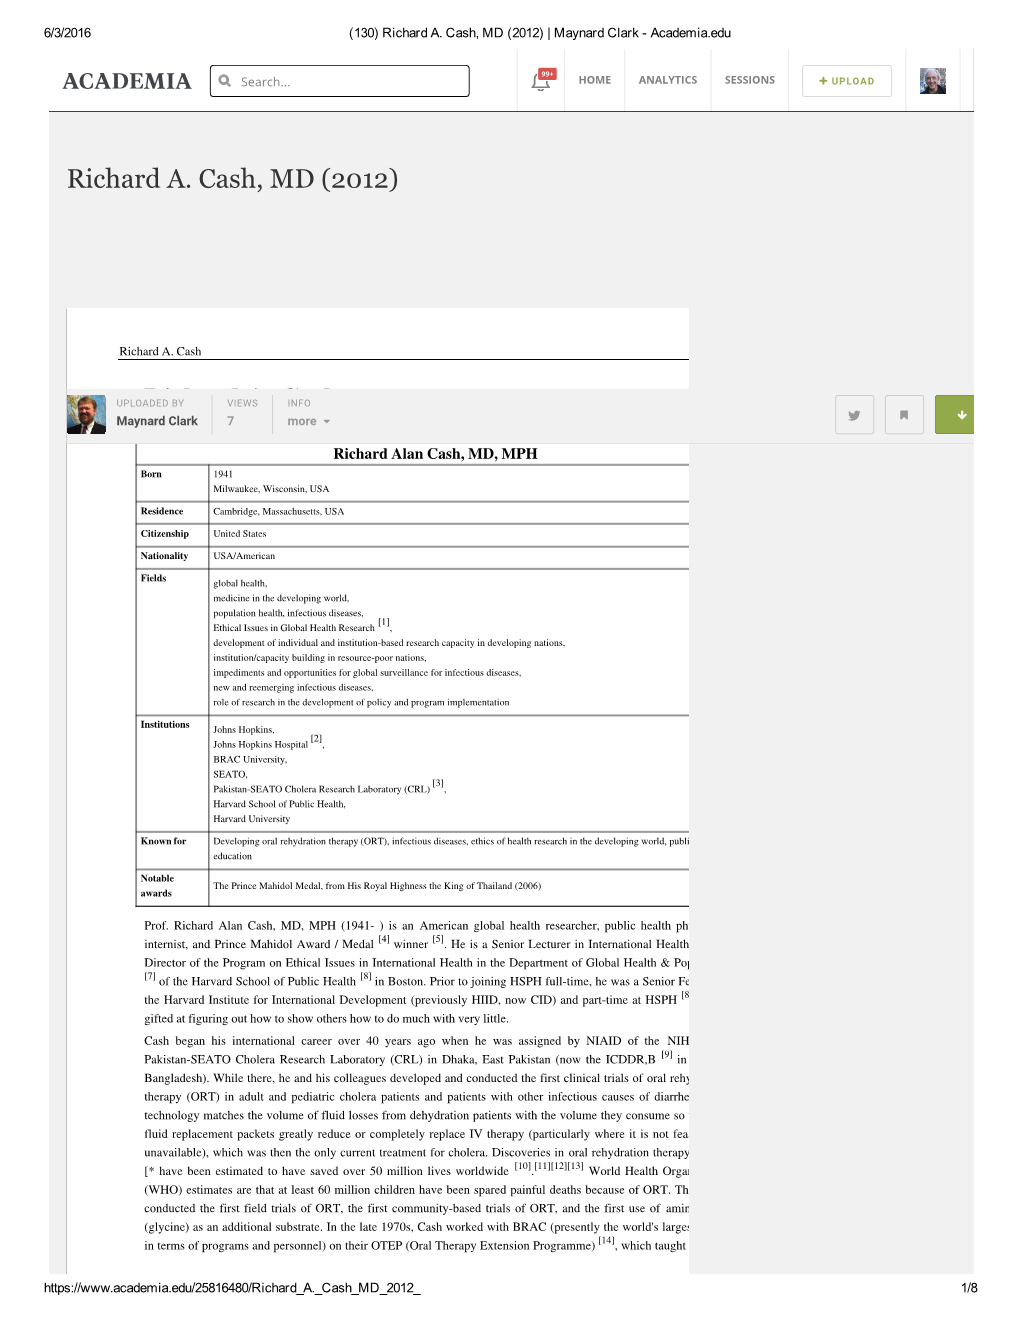 Richard A. Cash, MD (2012) | Maynard Clark ­ Academia.Edu